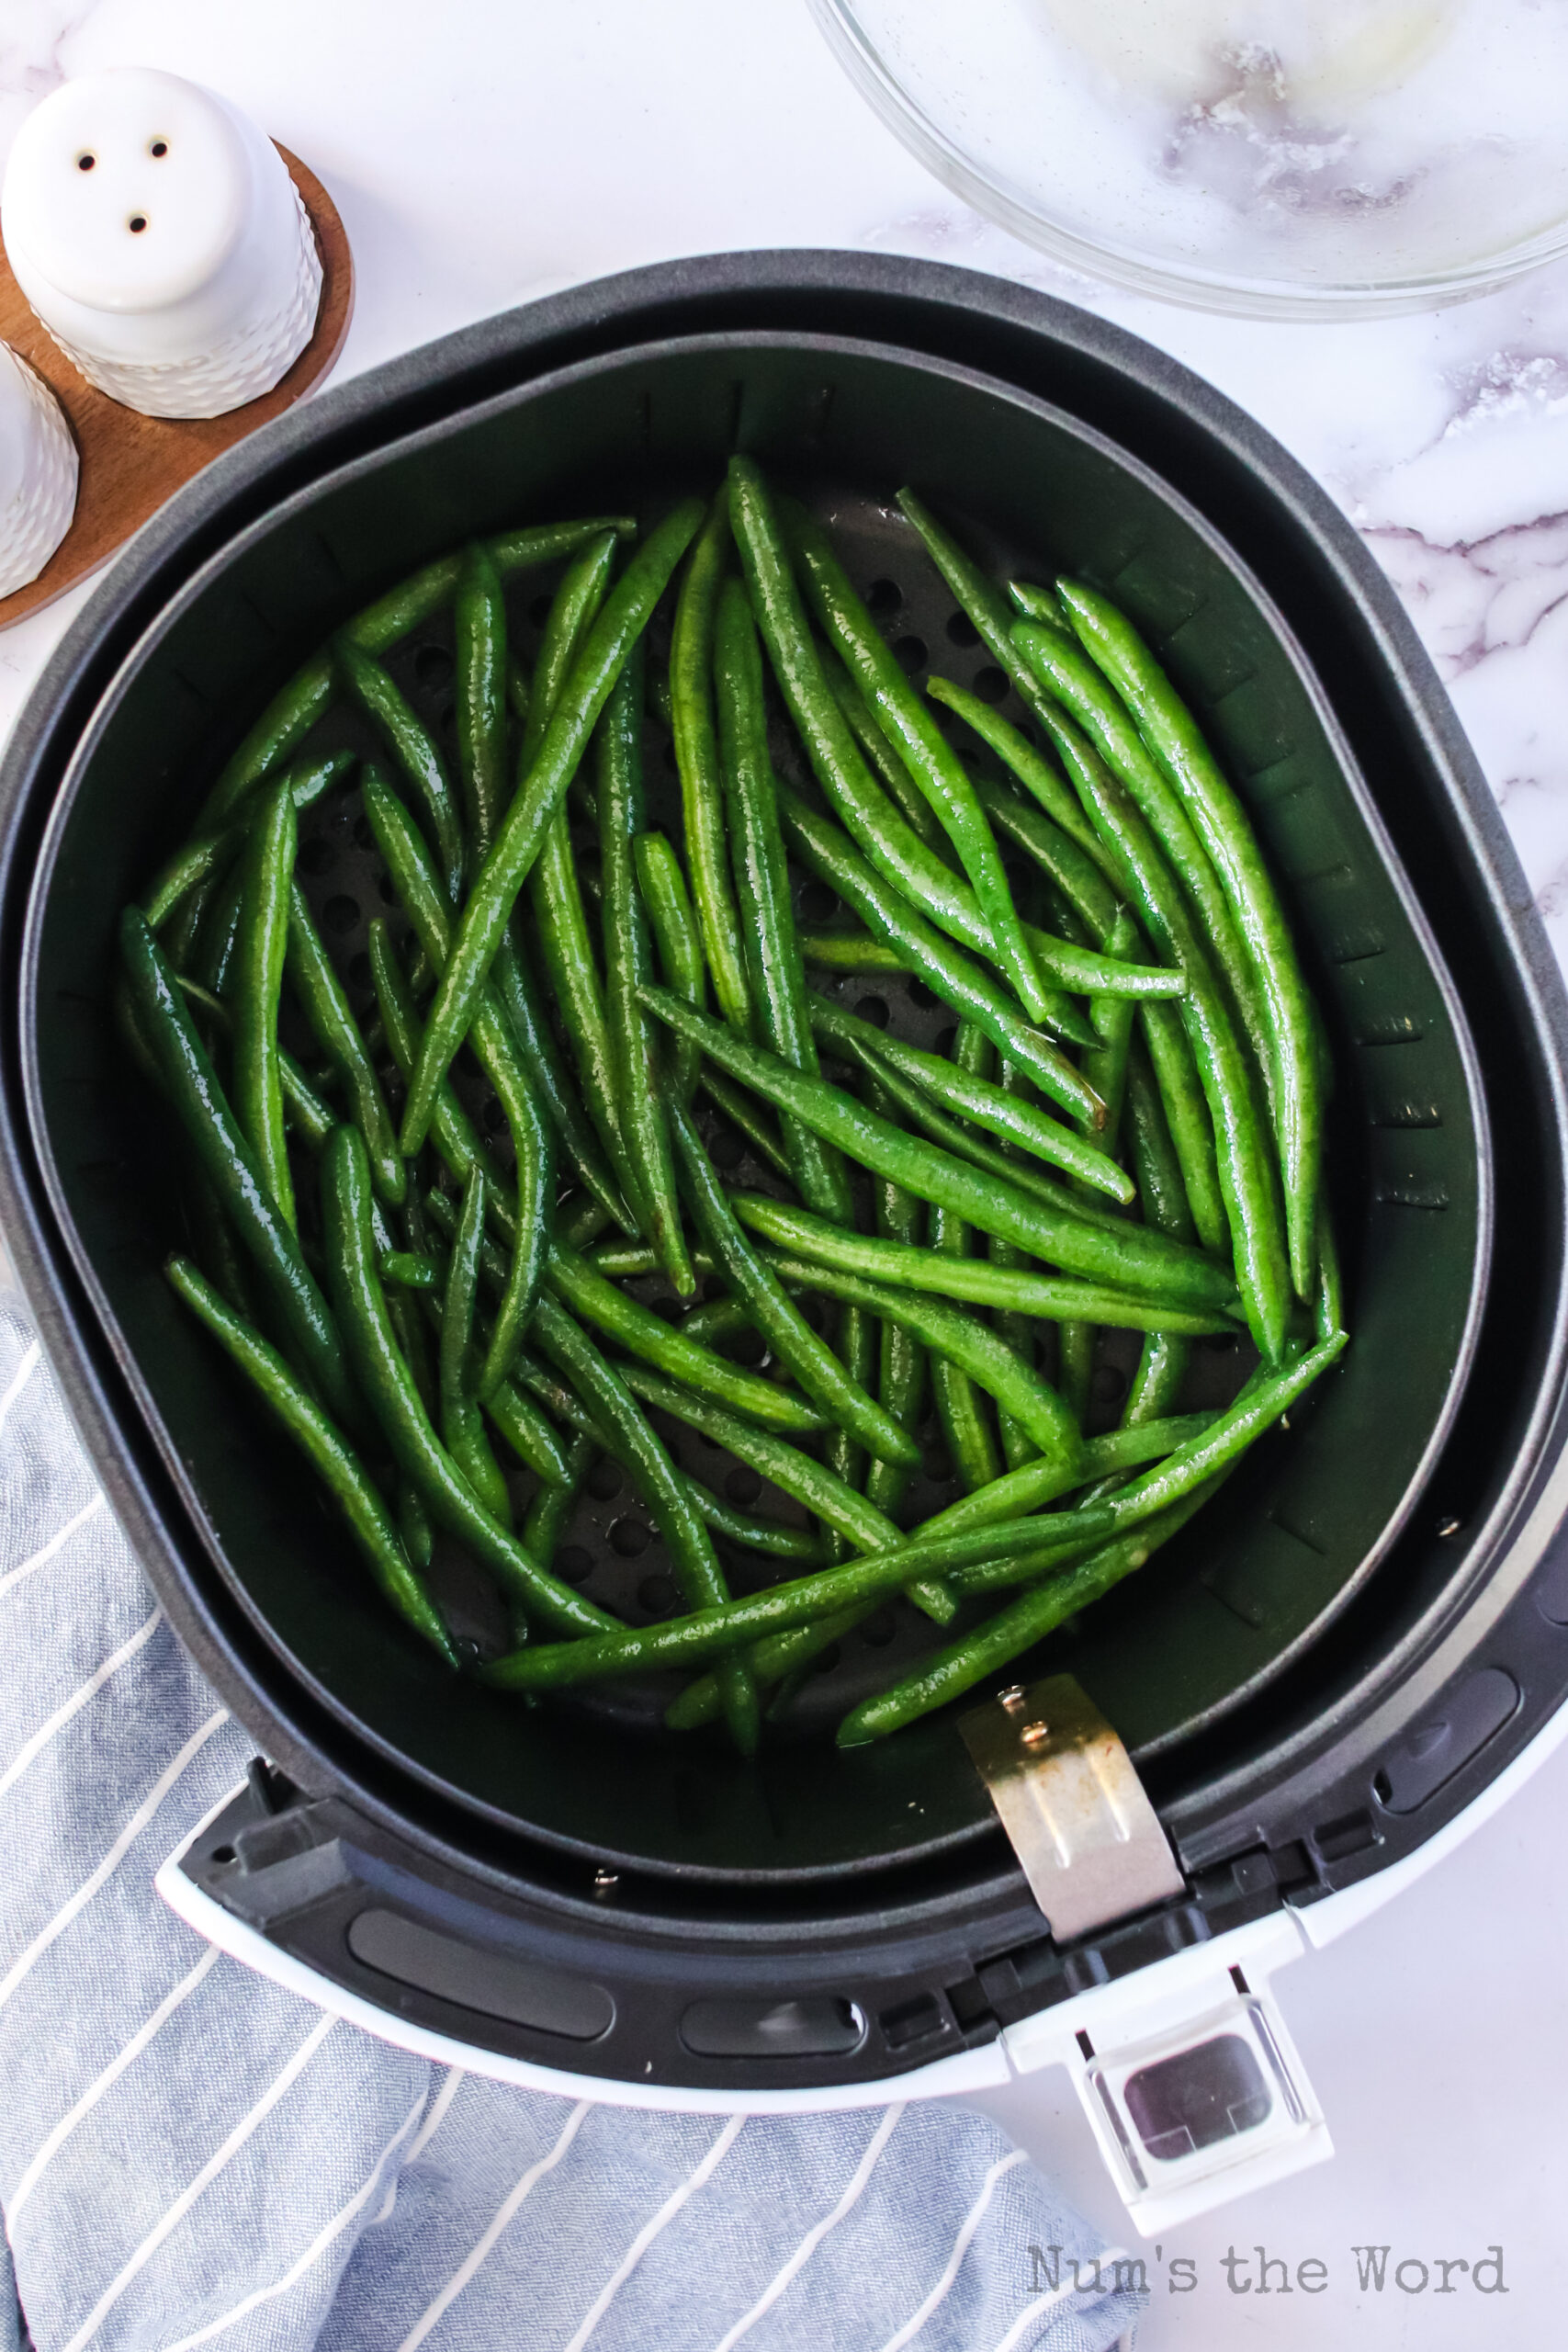 fresh green beans in air fryer basket